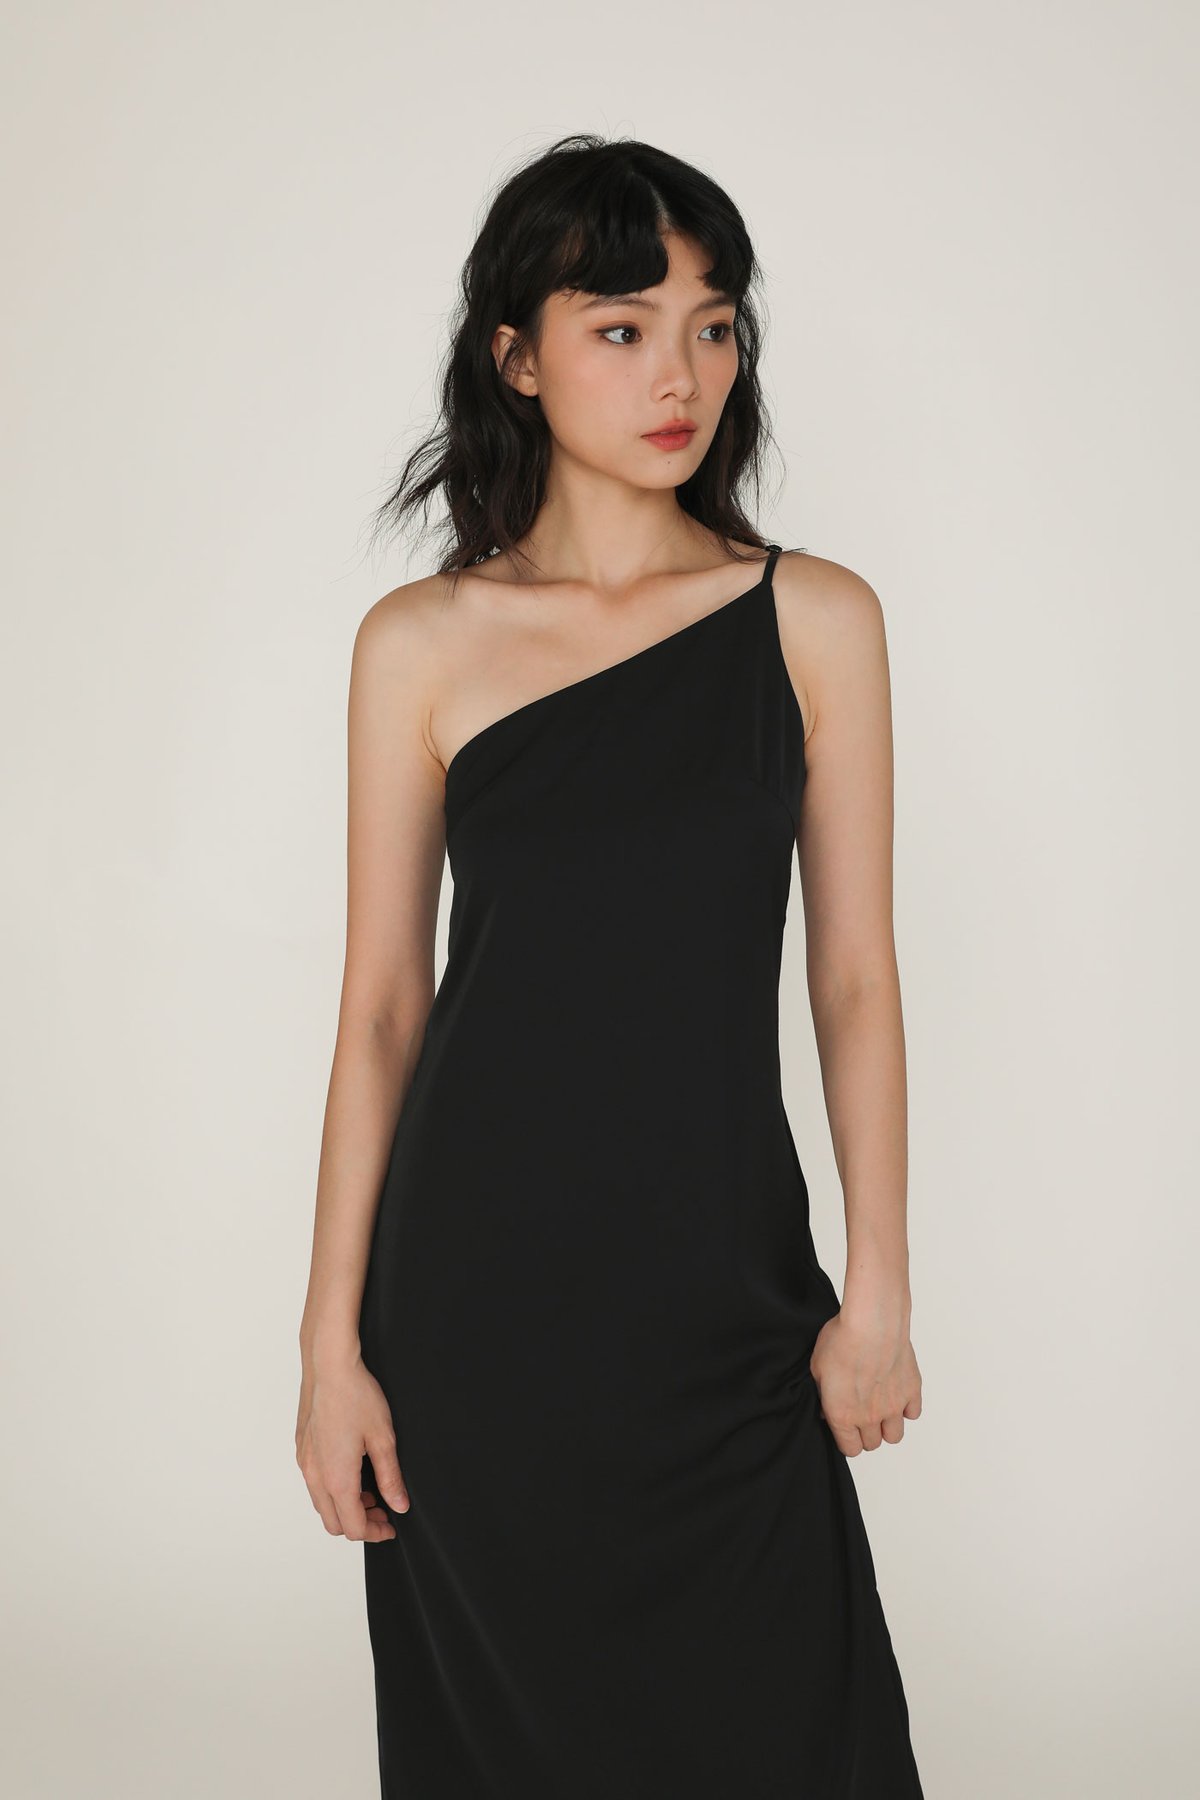 Bellanie Toga Dress (Black)